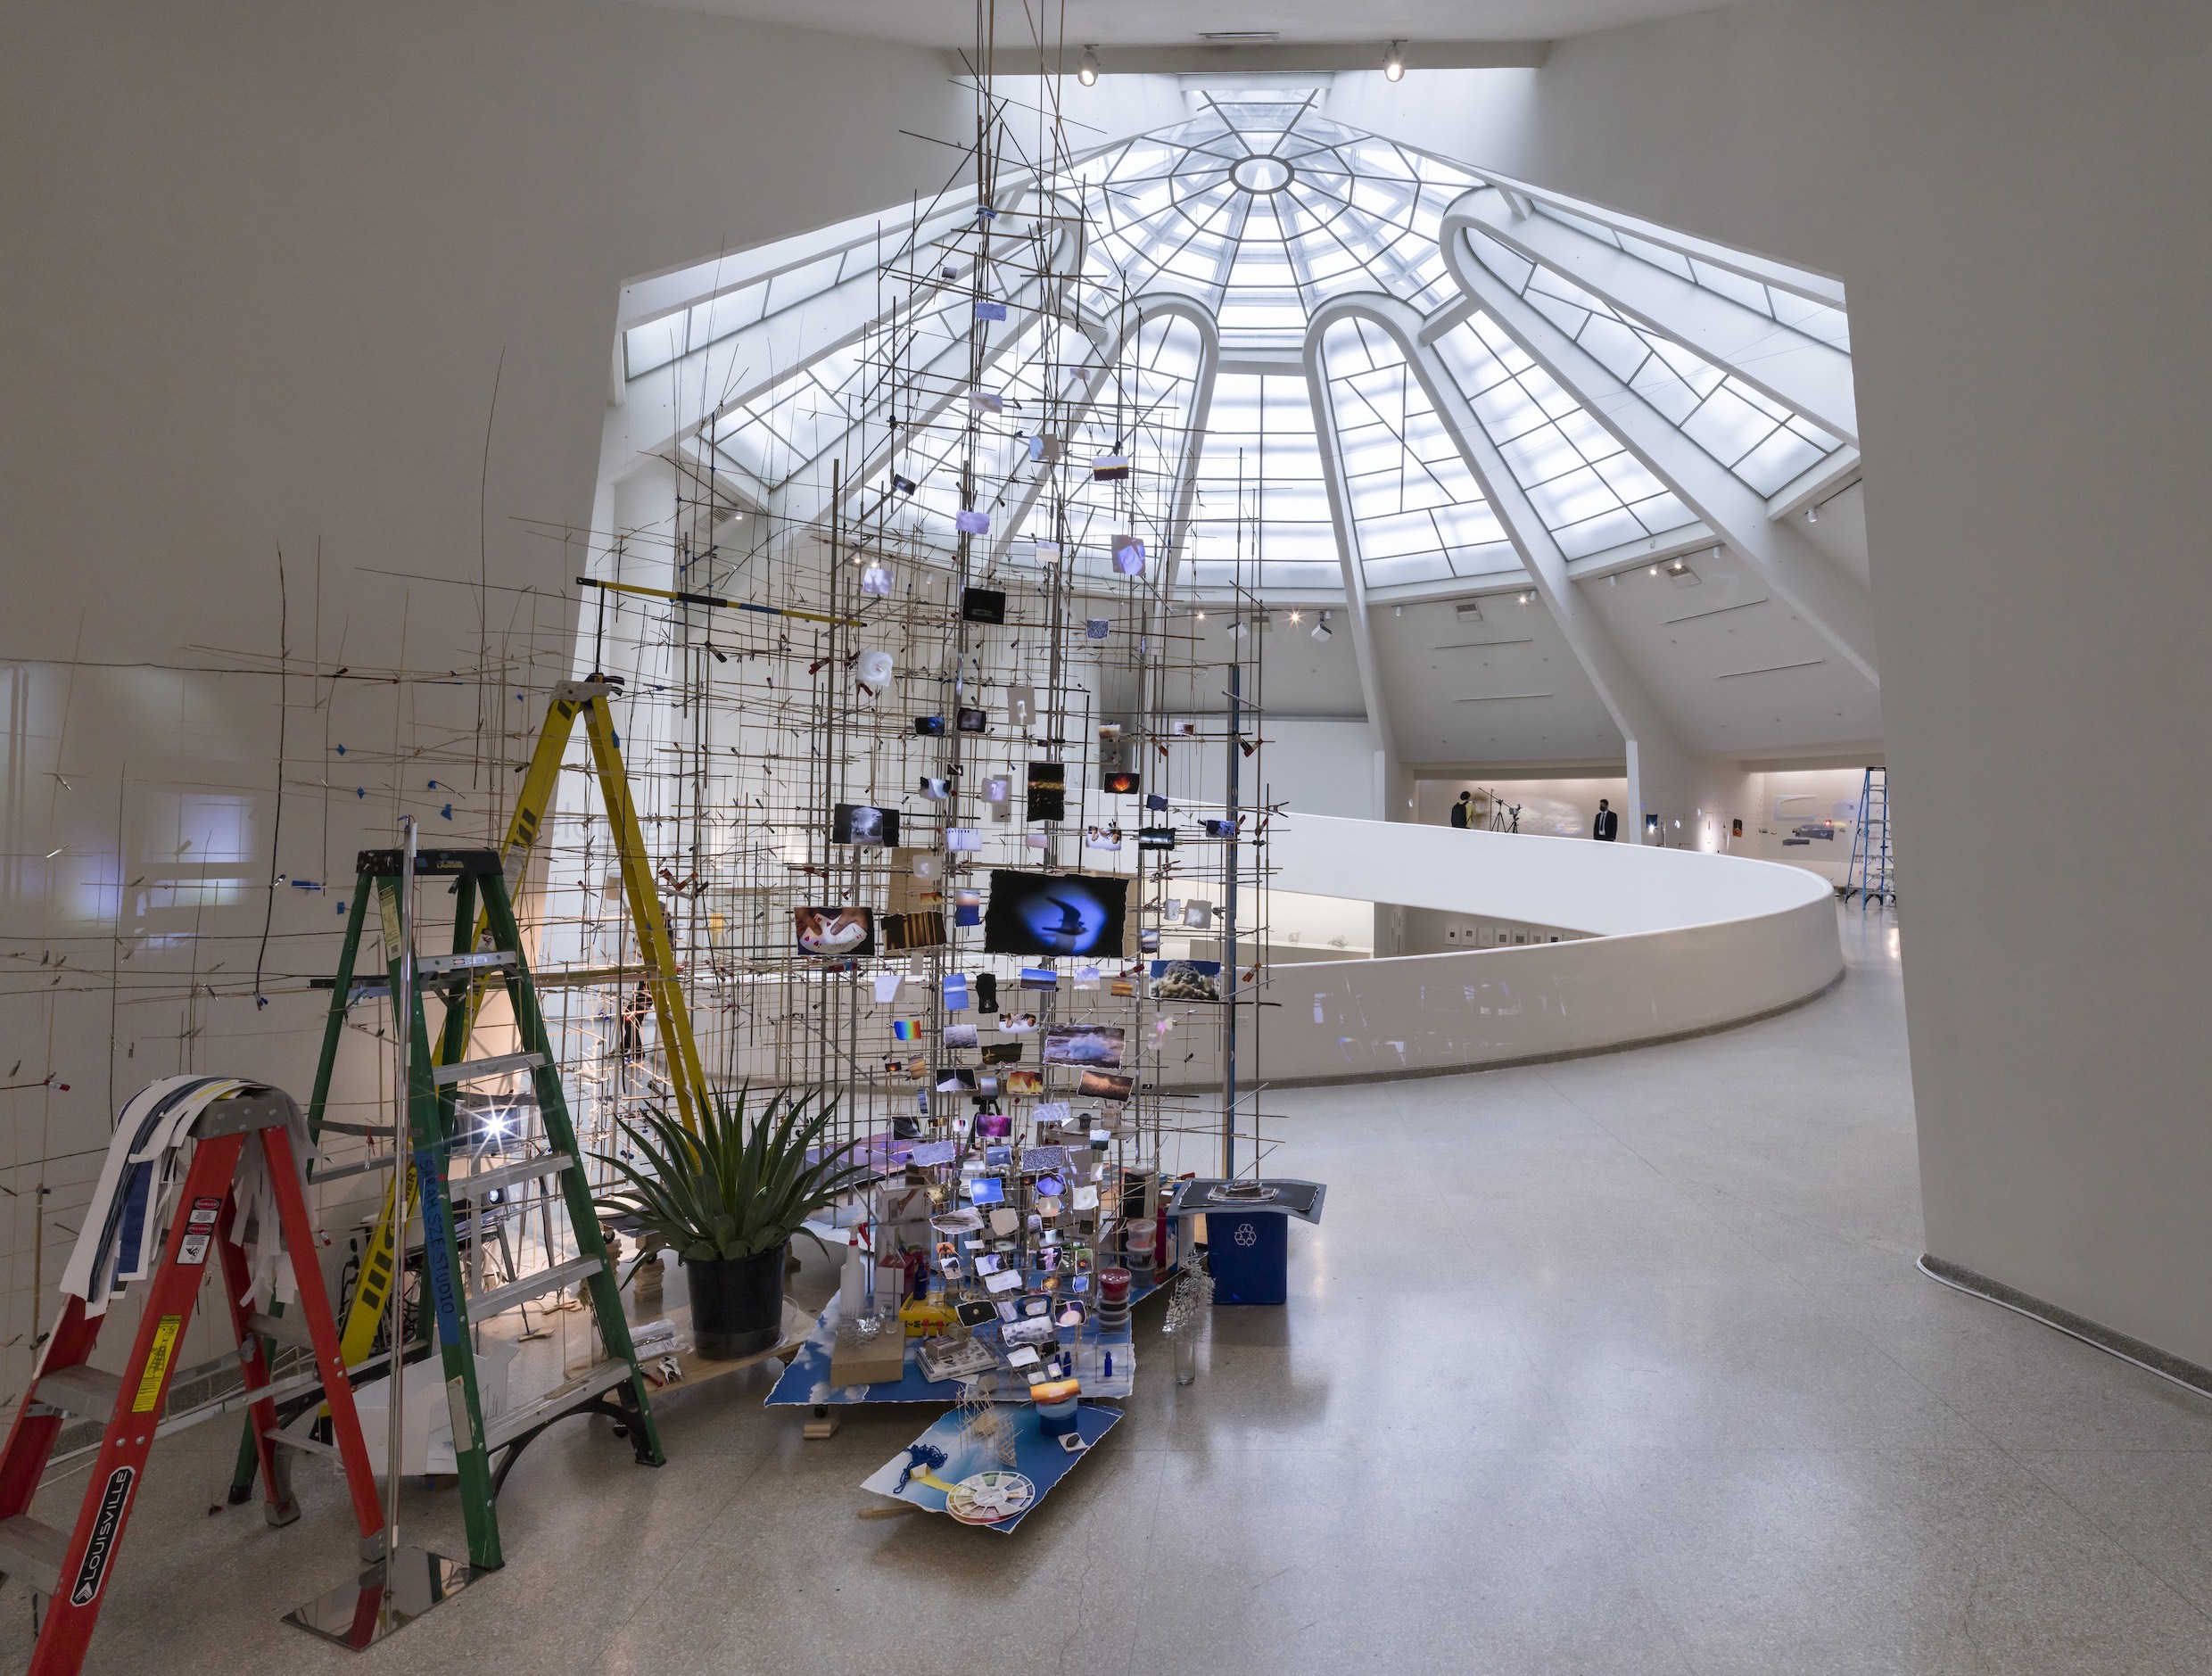 Installation view, “Sarah Sze: Timelapse,” Solomon R. Guggenheim Museum, New York,  Photo: David Heald © Solomon R. Guggenheim Foundation, New York